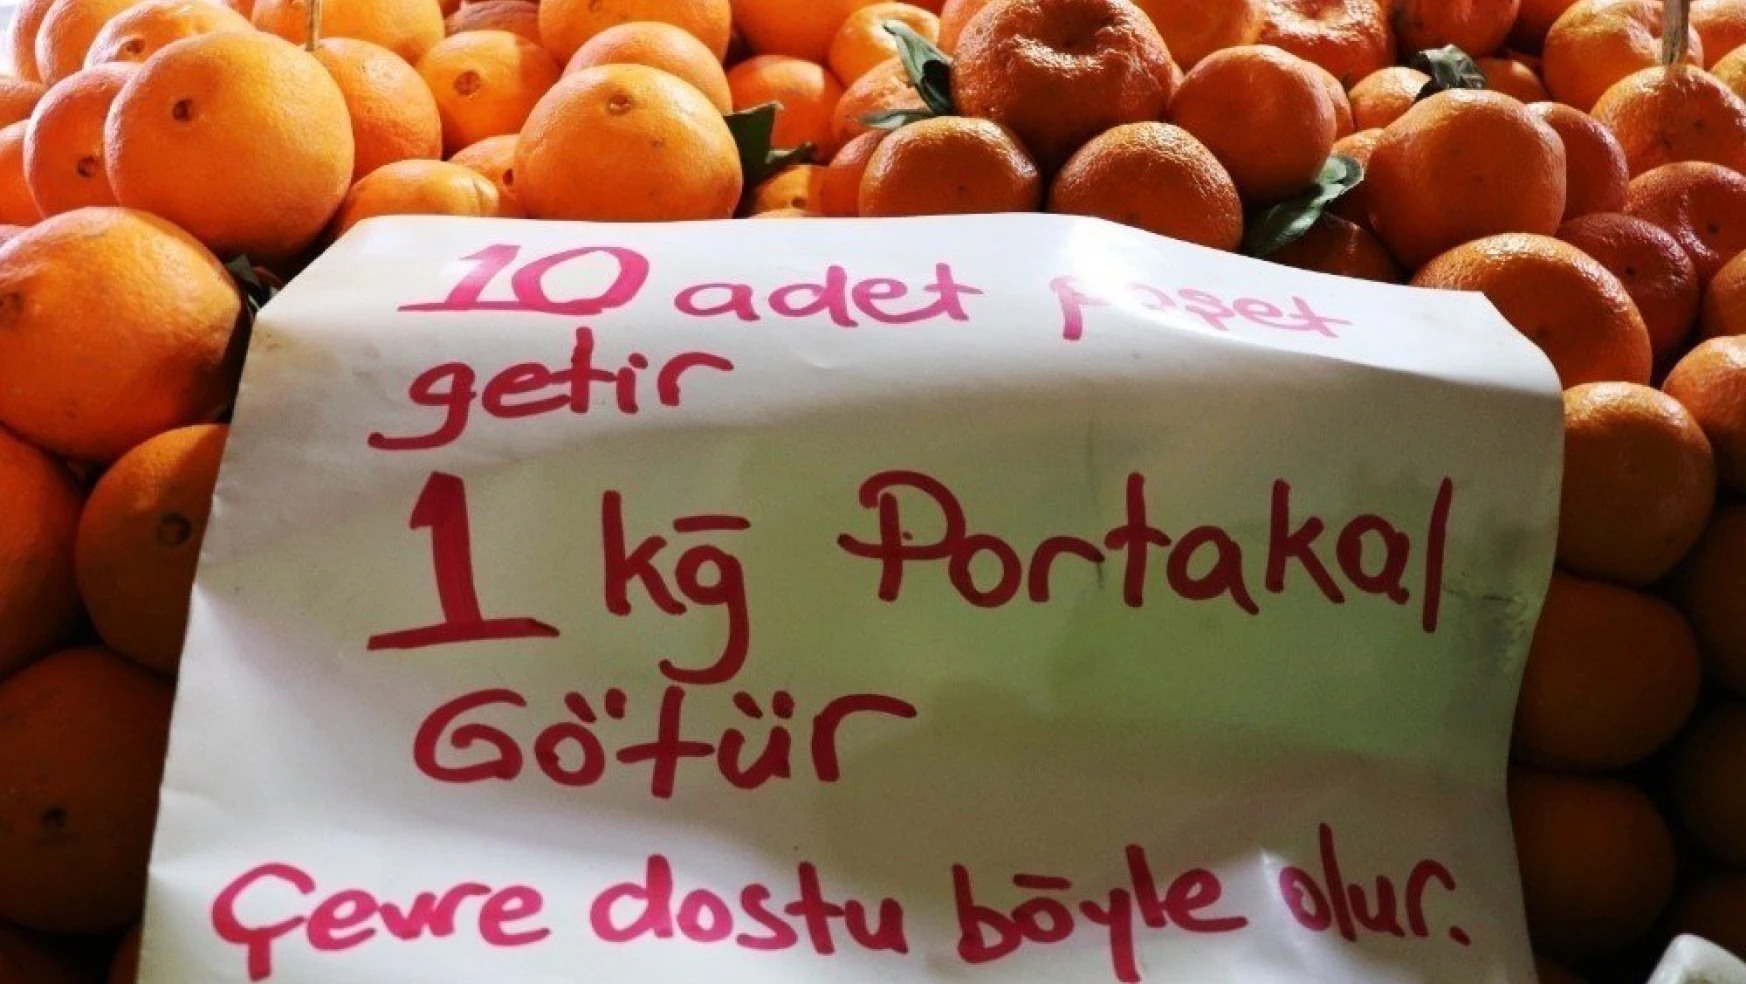 10 poşet getirene 1 kilo portakal bedava